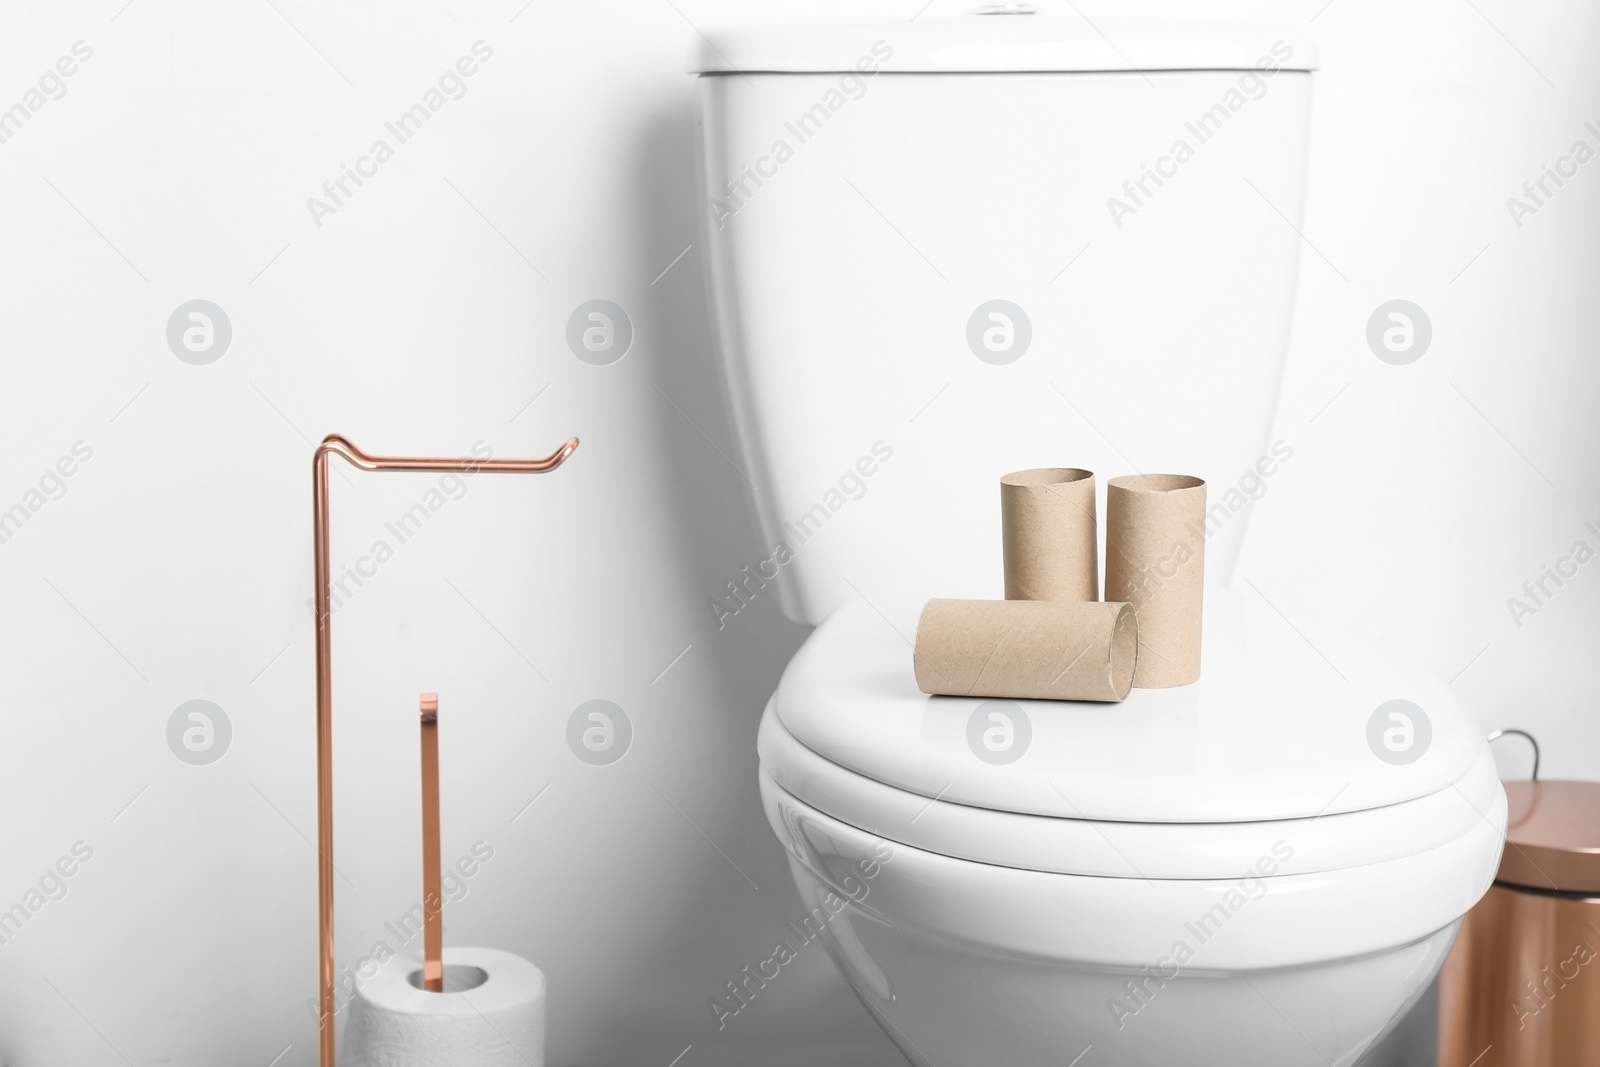 Photo of Empty paper rolls on toilet seat in bathroom